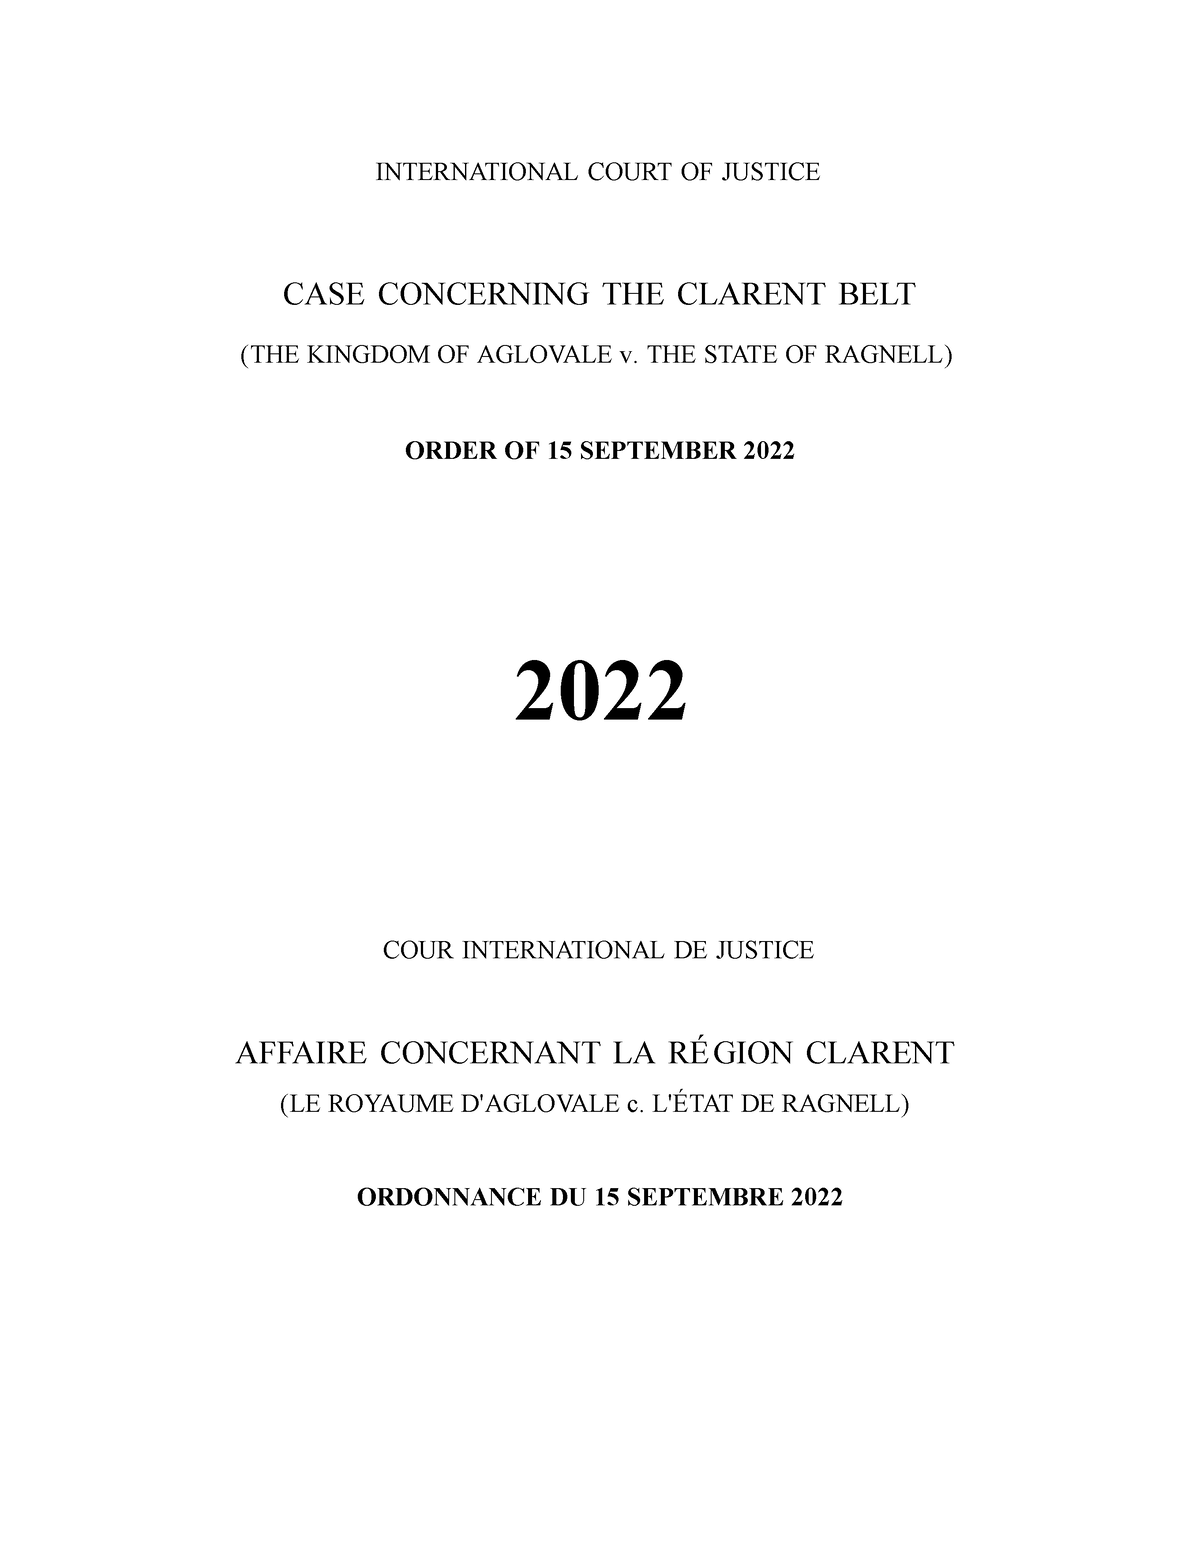 2023 Jessup Problem Final INTERNATIONAL COURT OF JUSTICE CASE